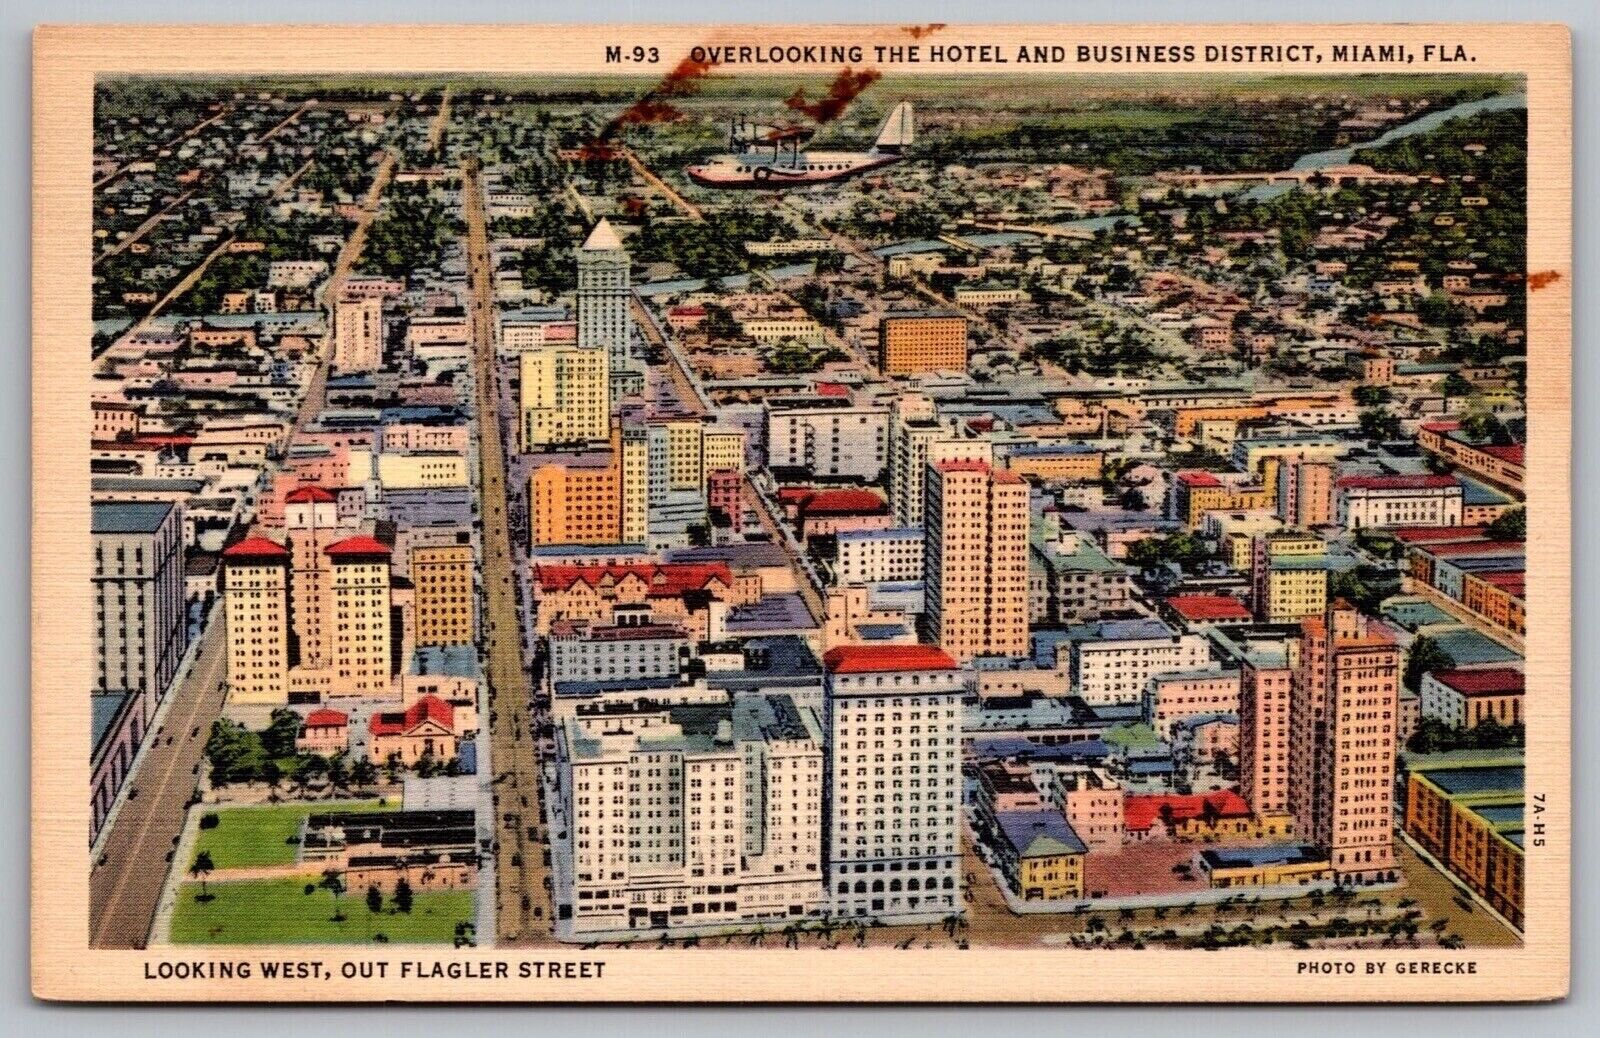 Hotel Business District Miami Florida Flagler Street Aerial View Plane Postcard